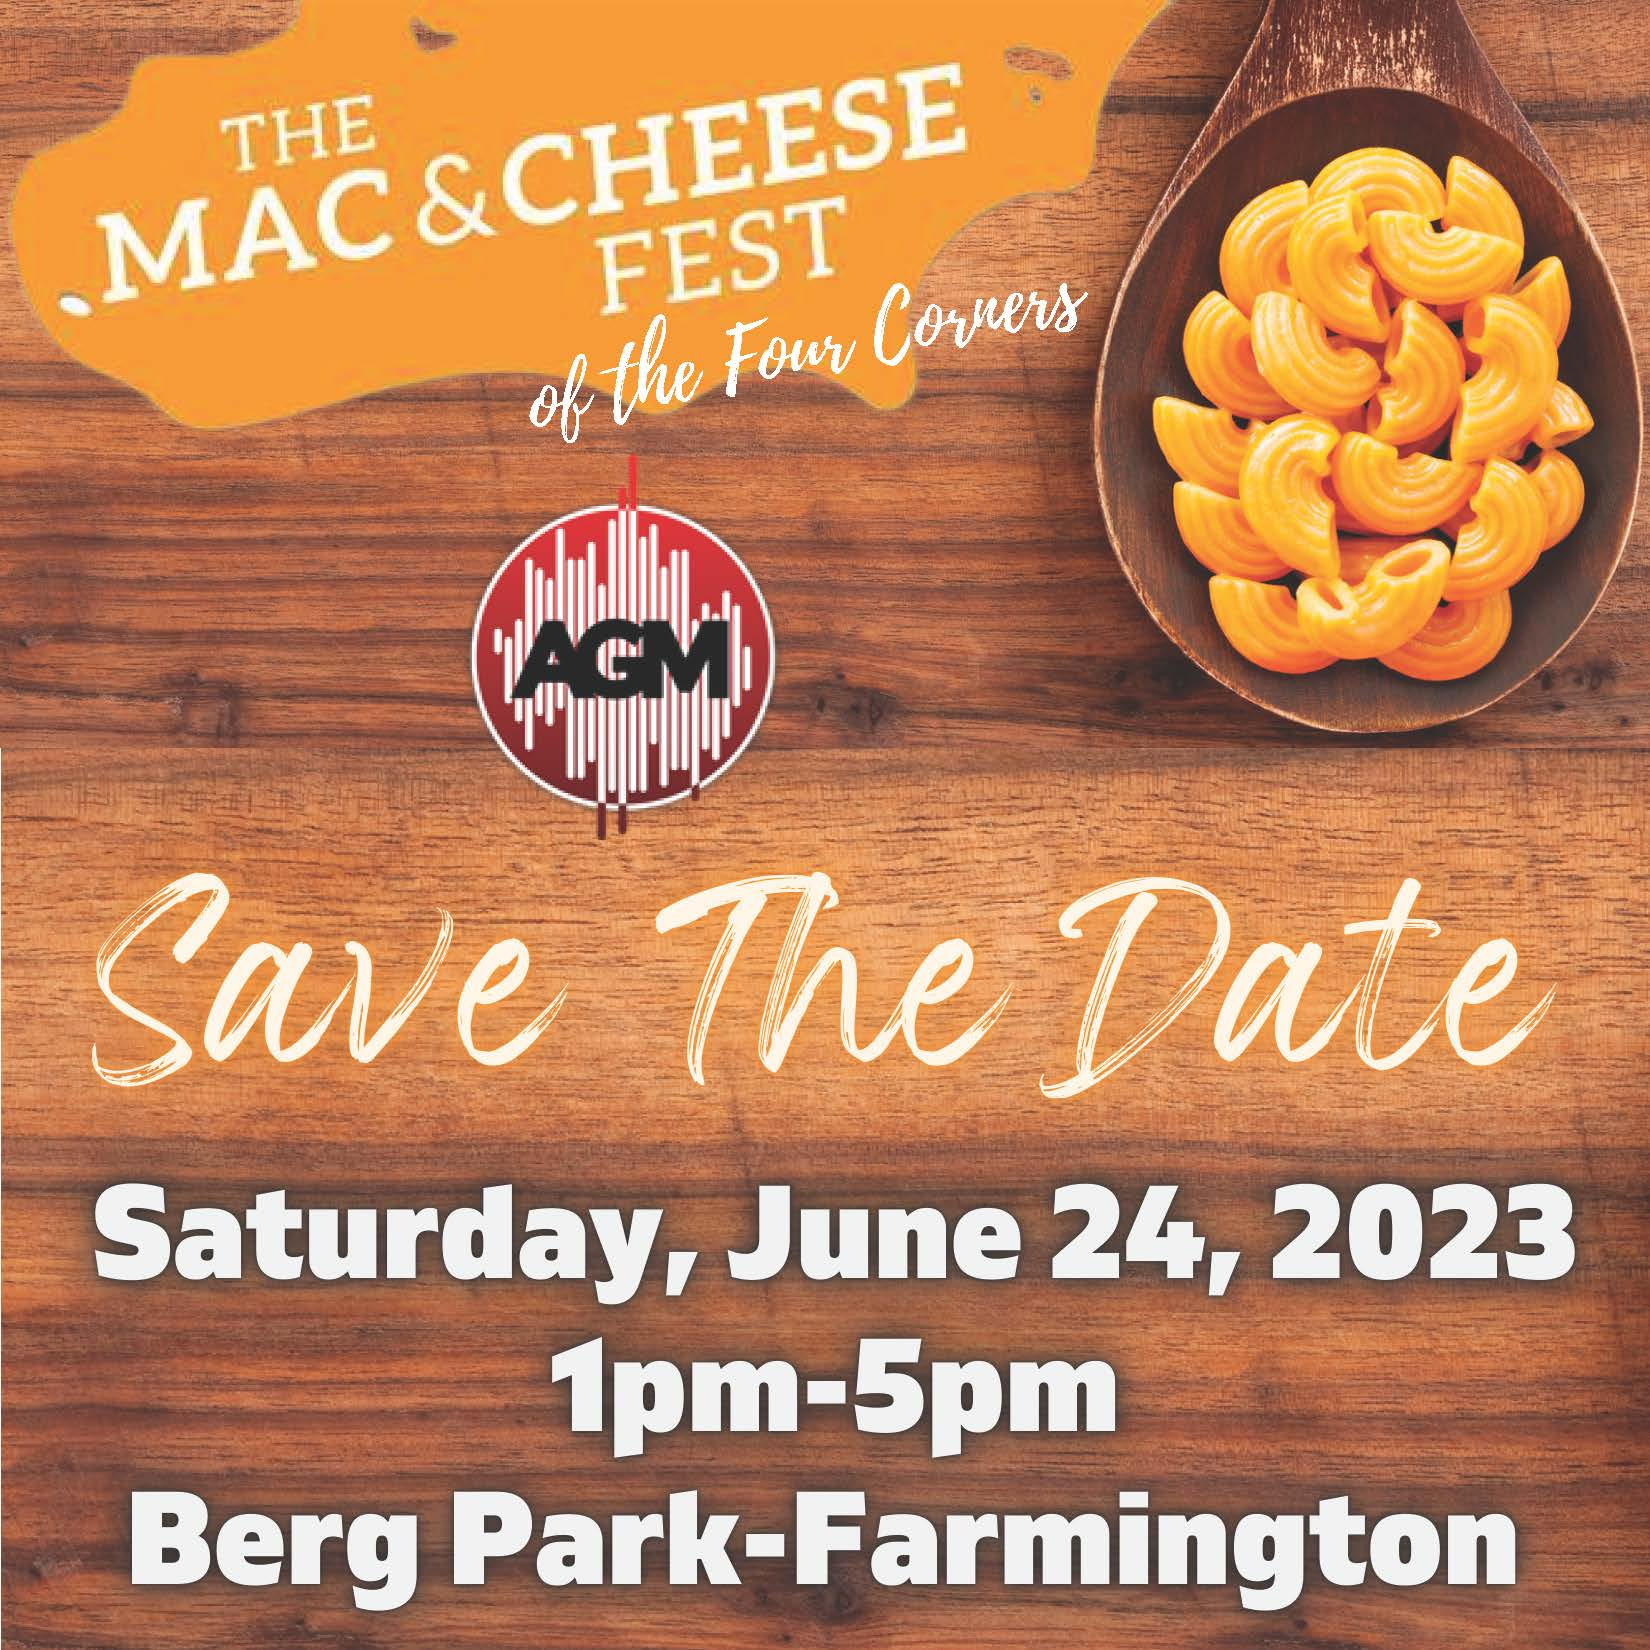 The Macaroni & Cheese Festival